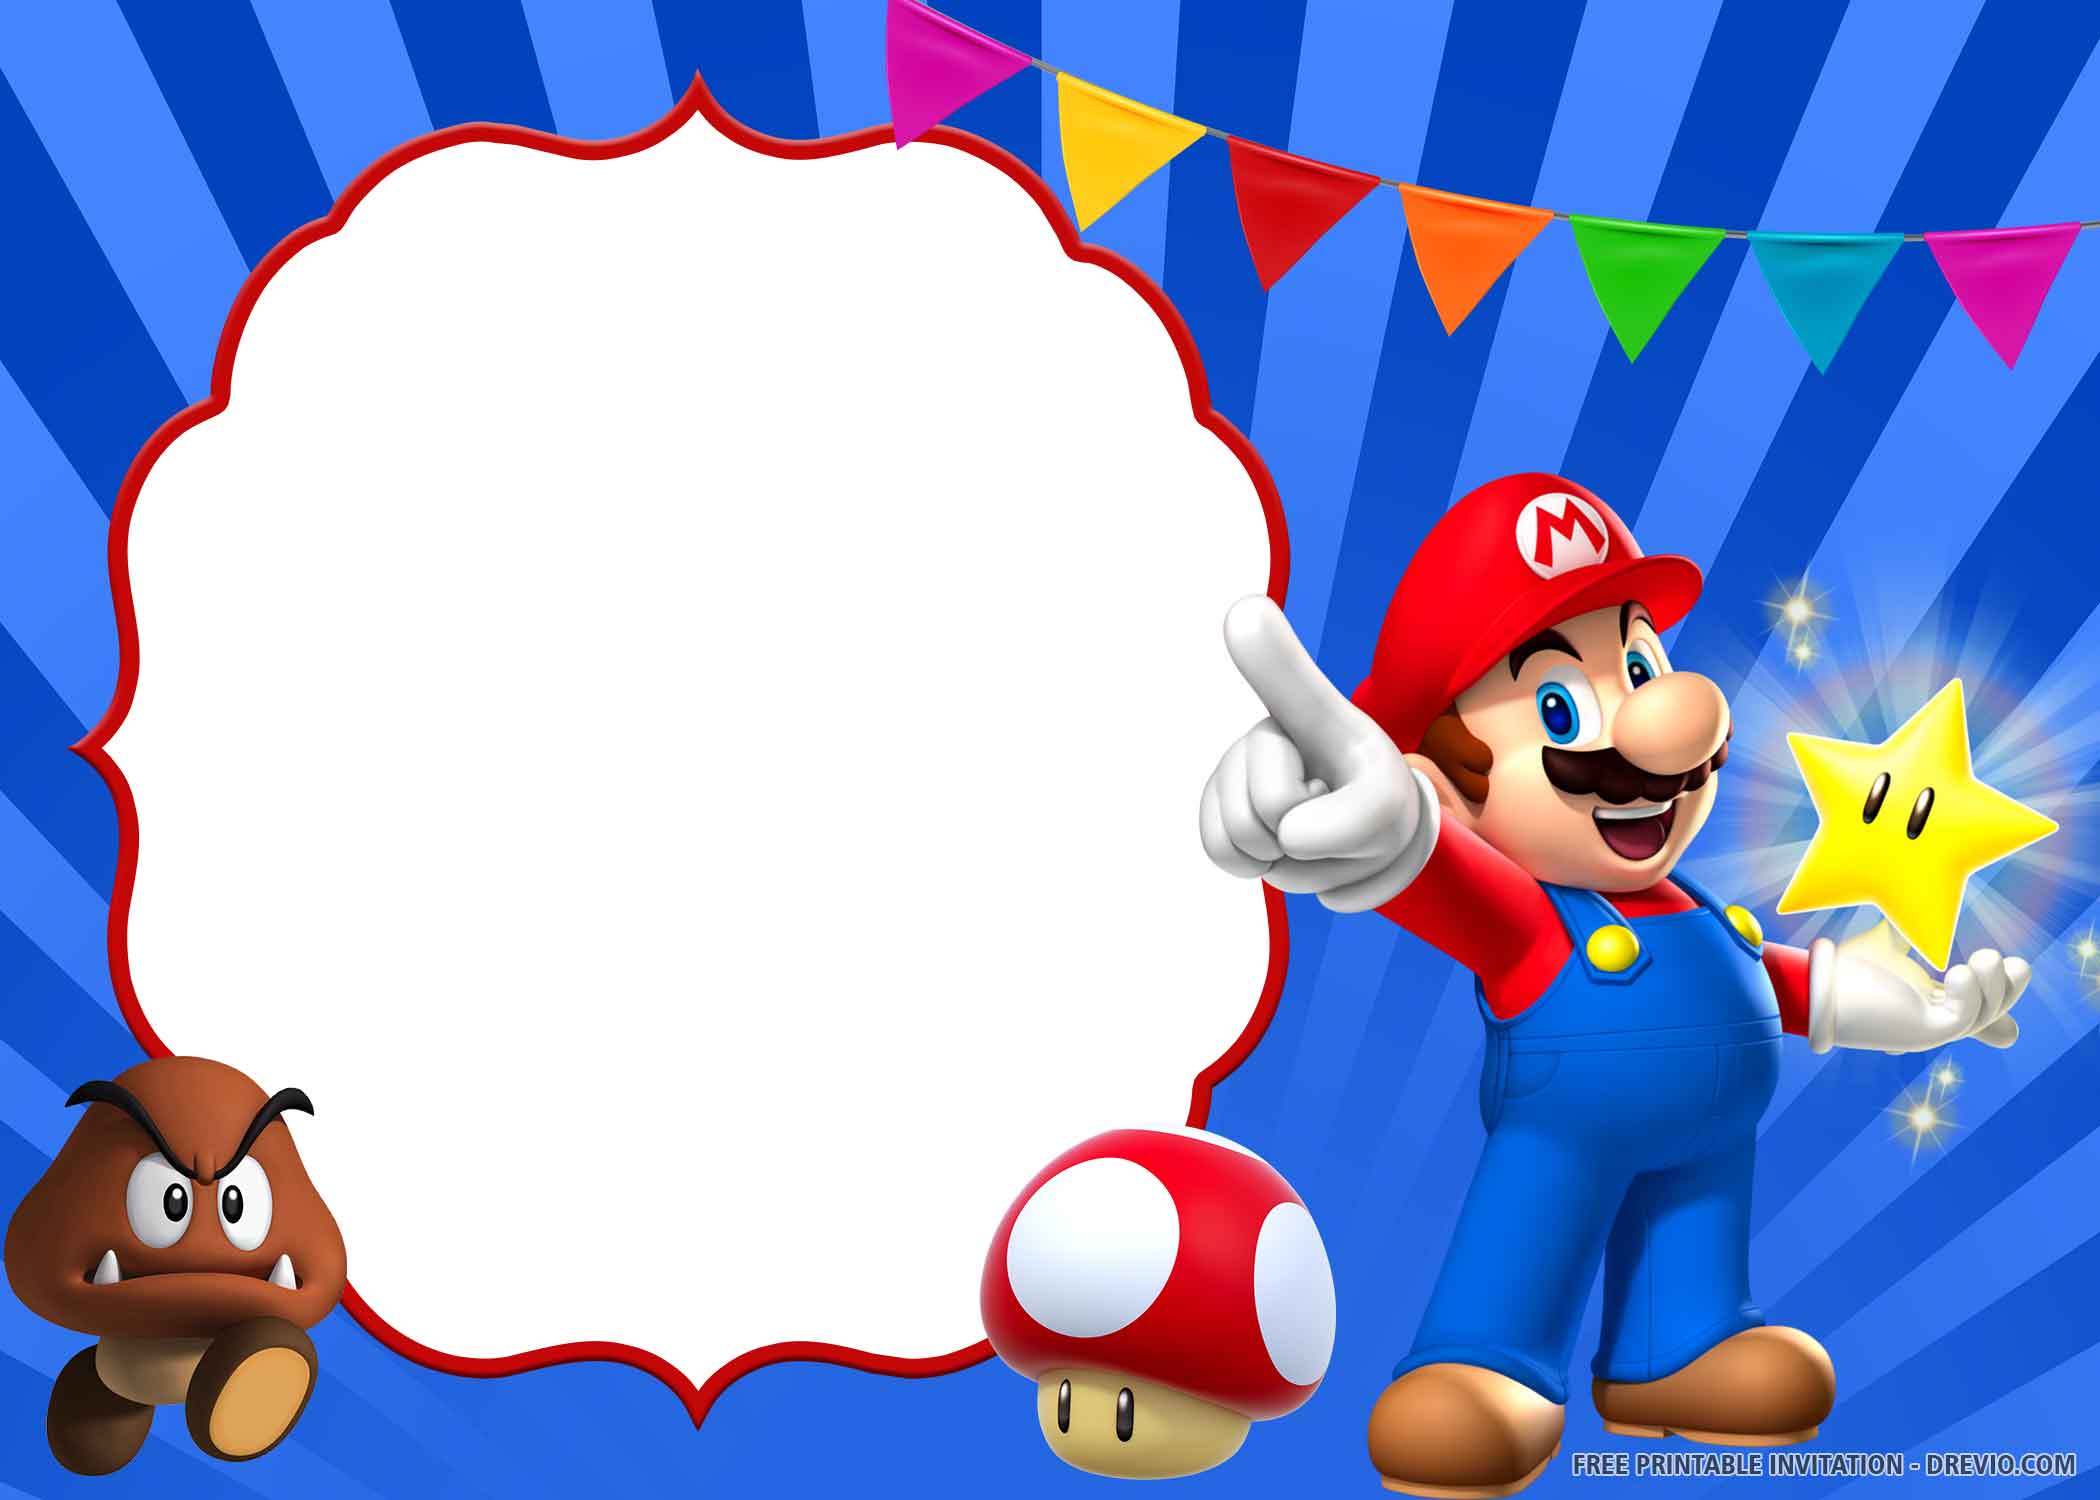  FREE PRINTABLE Super Mario Birthday Invitation Templates Download Hundreds FREE PRINTABLE